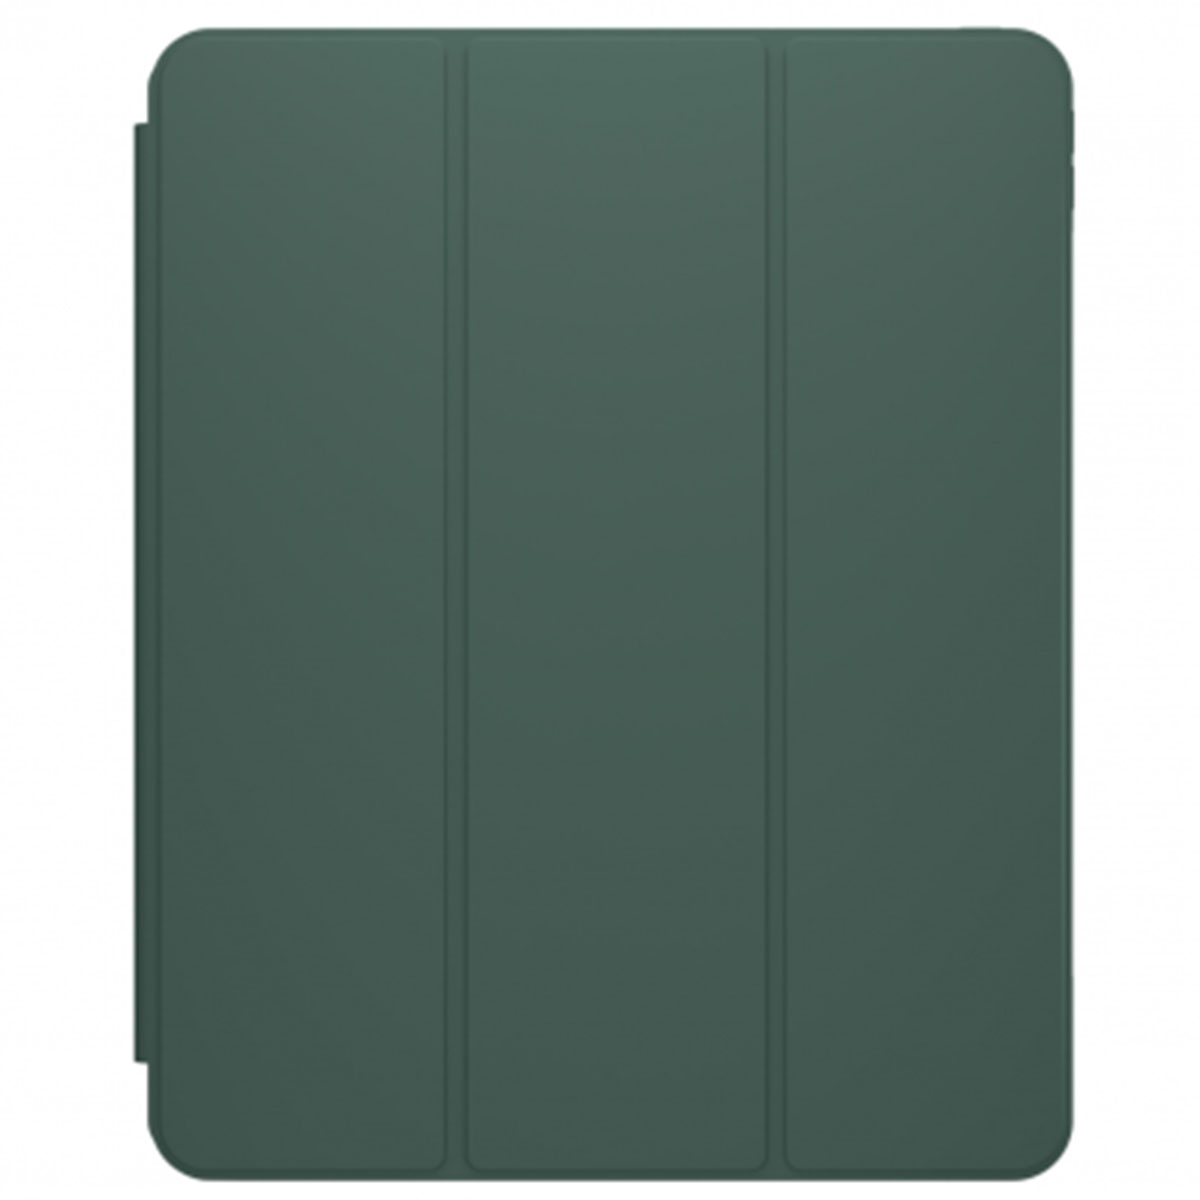 Husa de protectie tableta Next One pentru Apple iPad 12.9 inch, Suport Pen, Protectie 360, Plastic si microfiba interior, Leaf Green